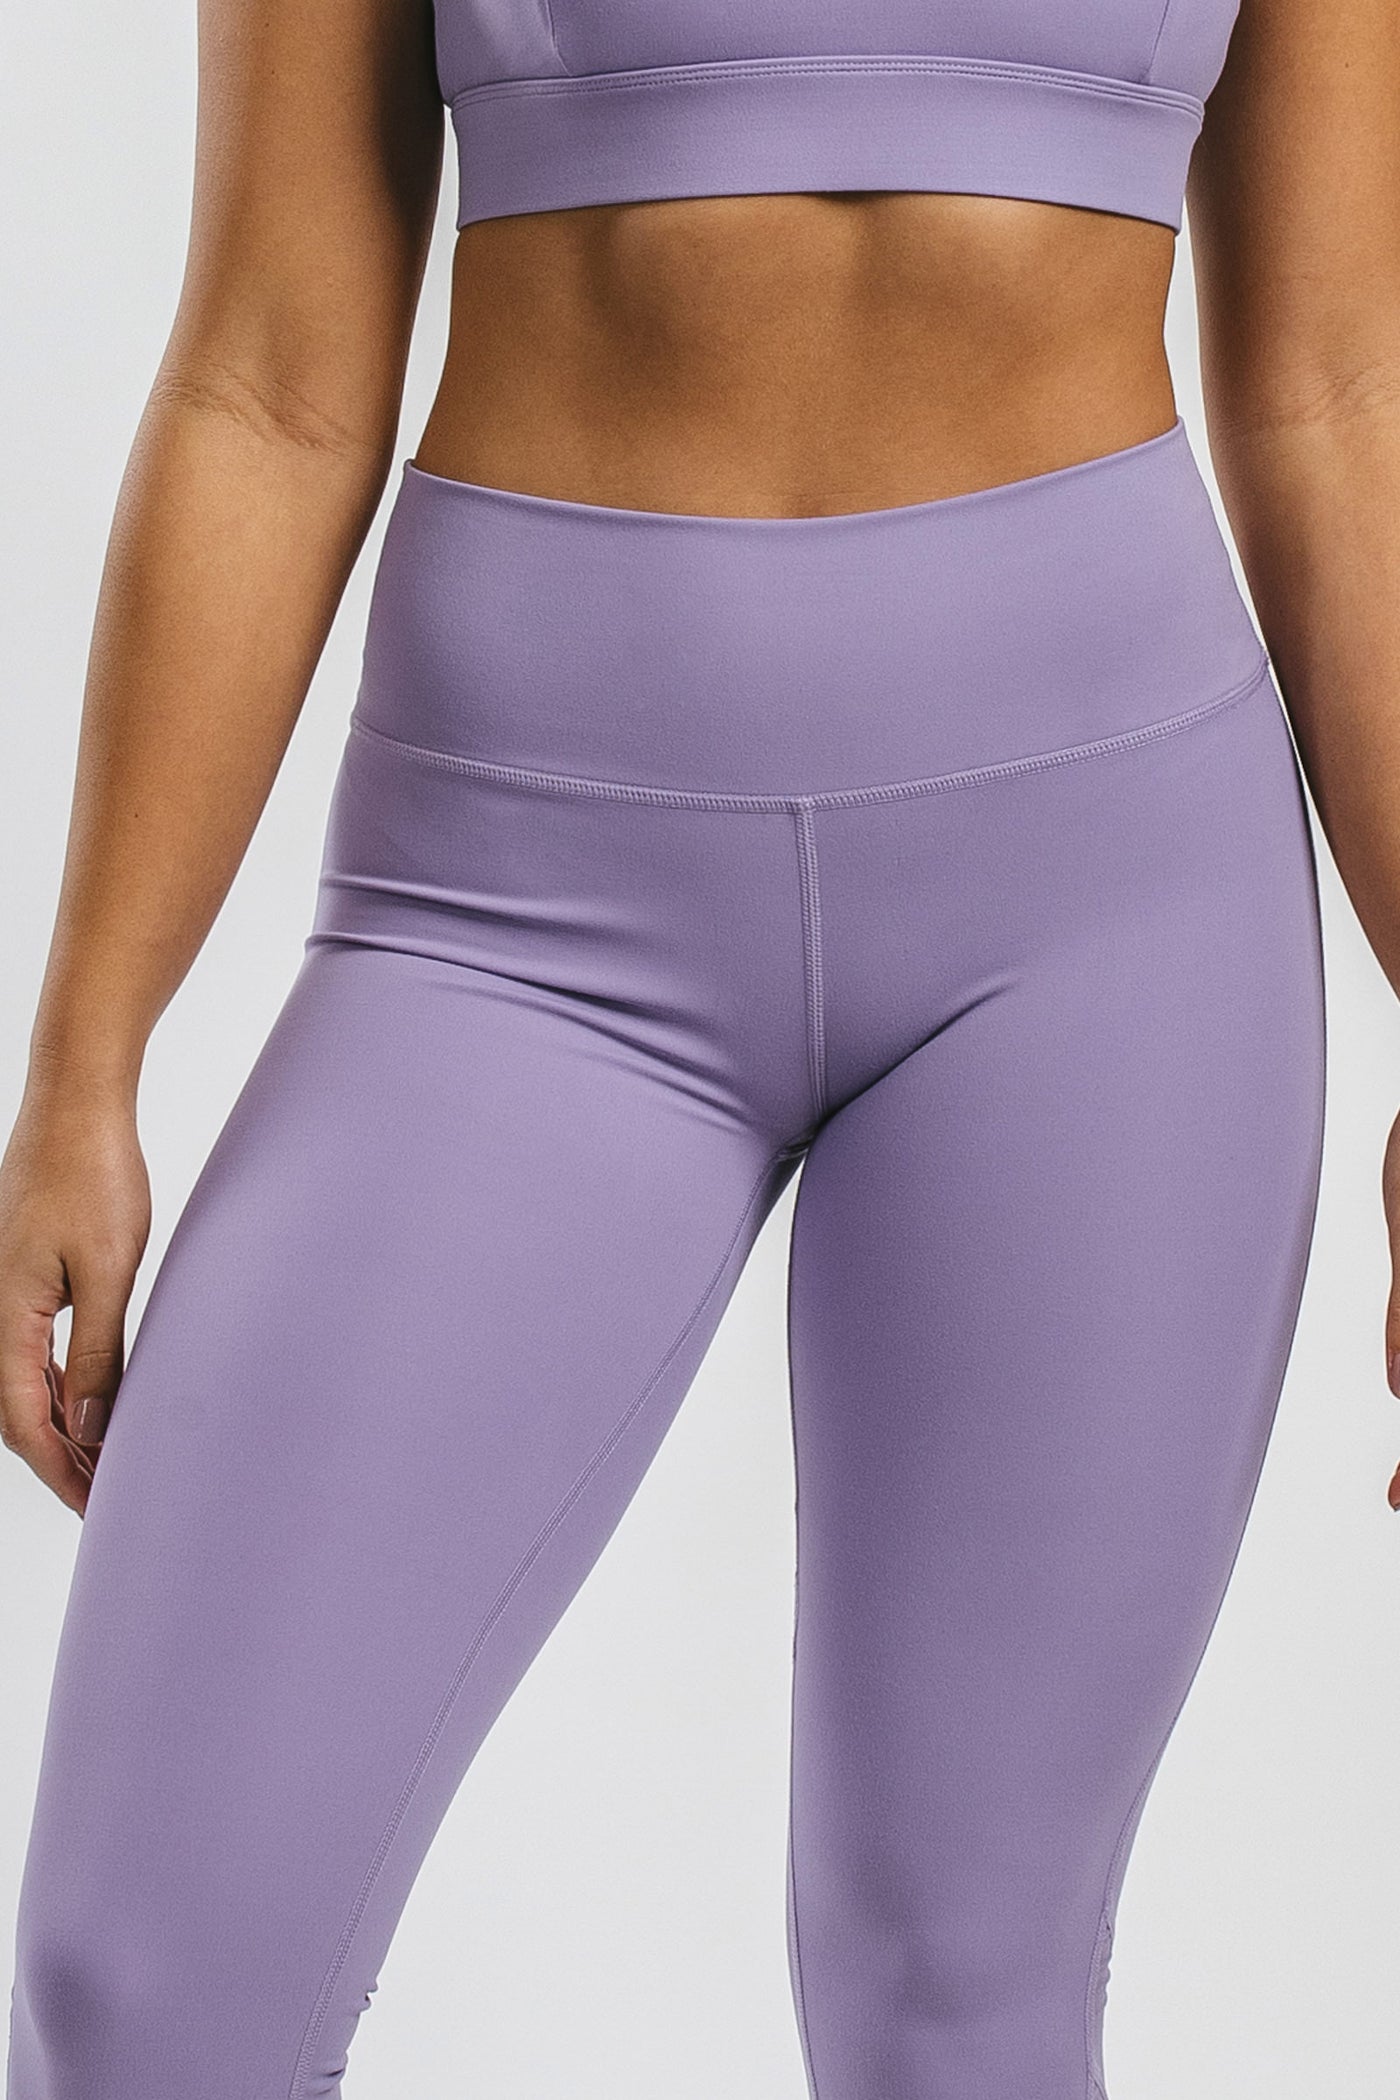 the luna leggings effect🍑😅 buy 1 get 1 free while stocks last! #gym